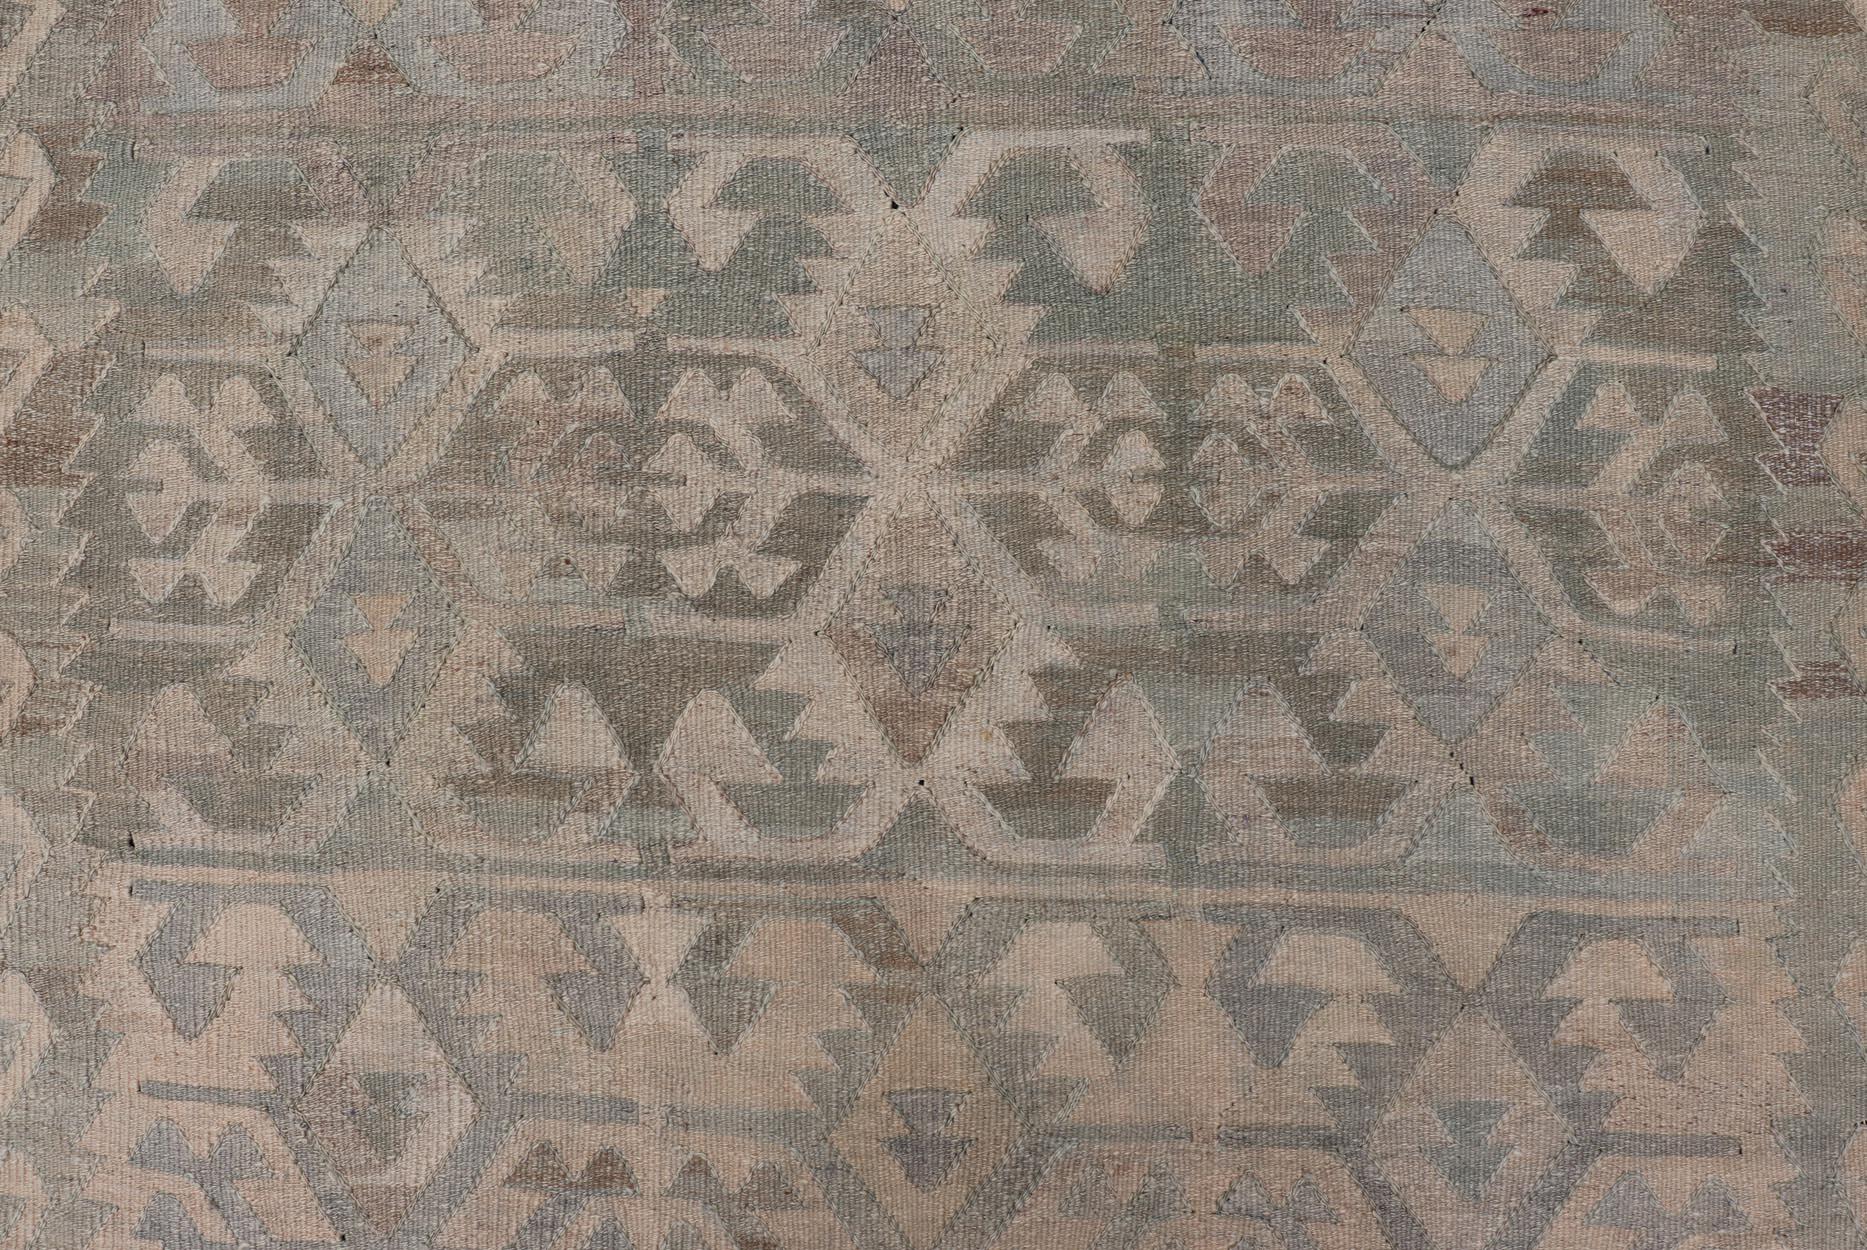 Gallery Turkish Vintage Flat-Weave Tribal Designed Kilim in Earthy Tones In Good Condition For Sale In Atlanta, GA